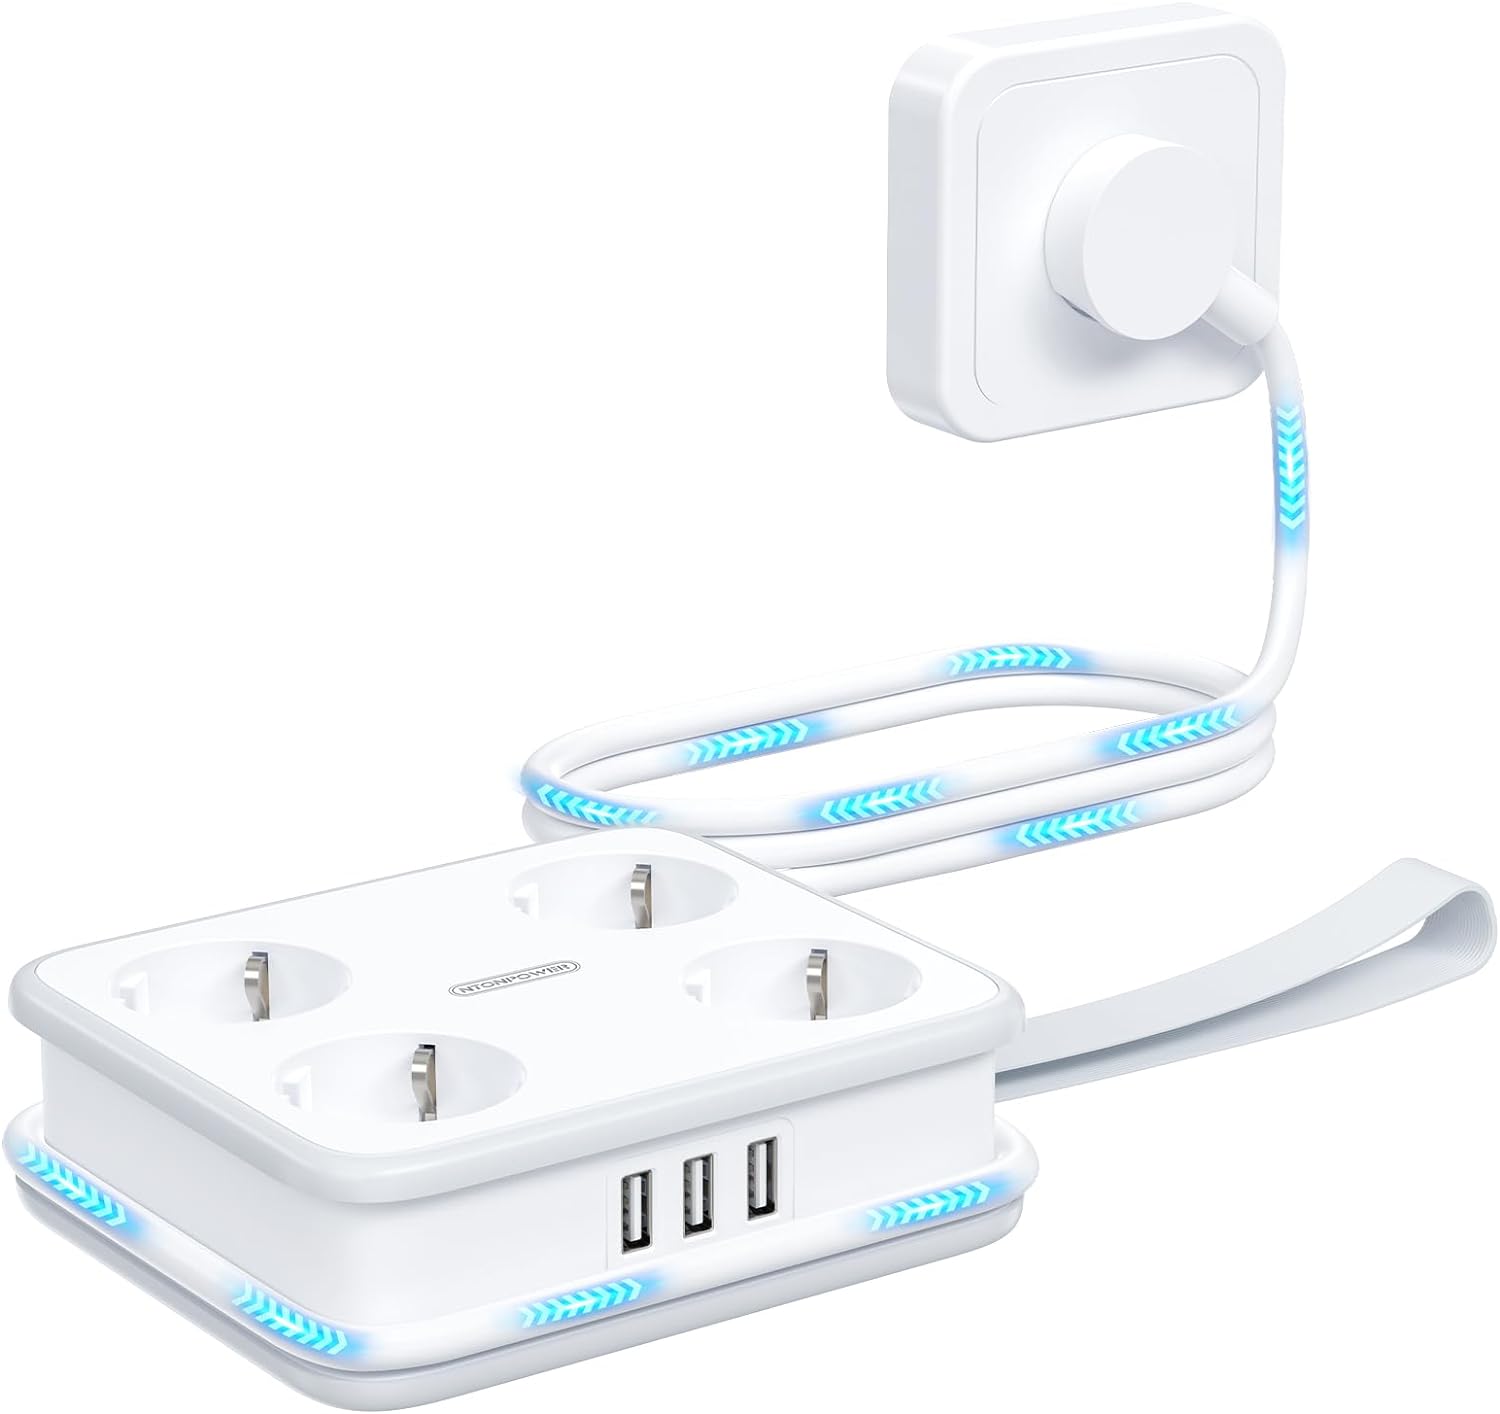 Ntonpower New EU Power Strip 4 Outlets 3 USB Ports